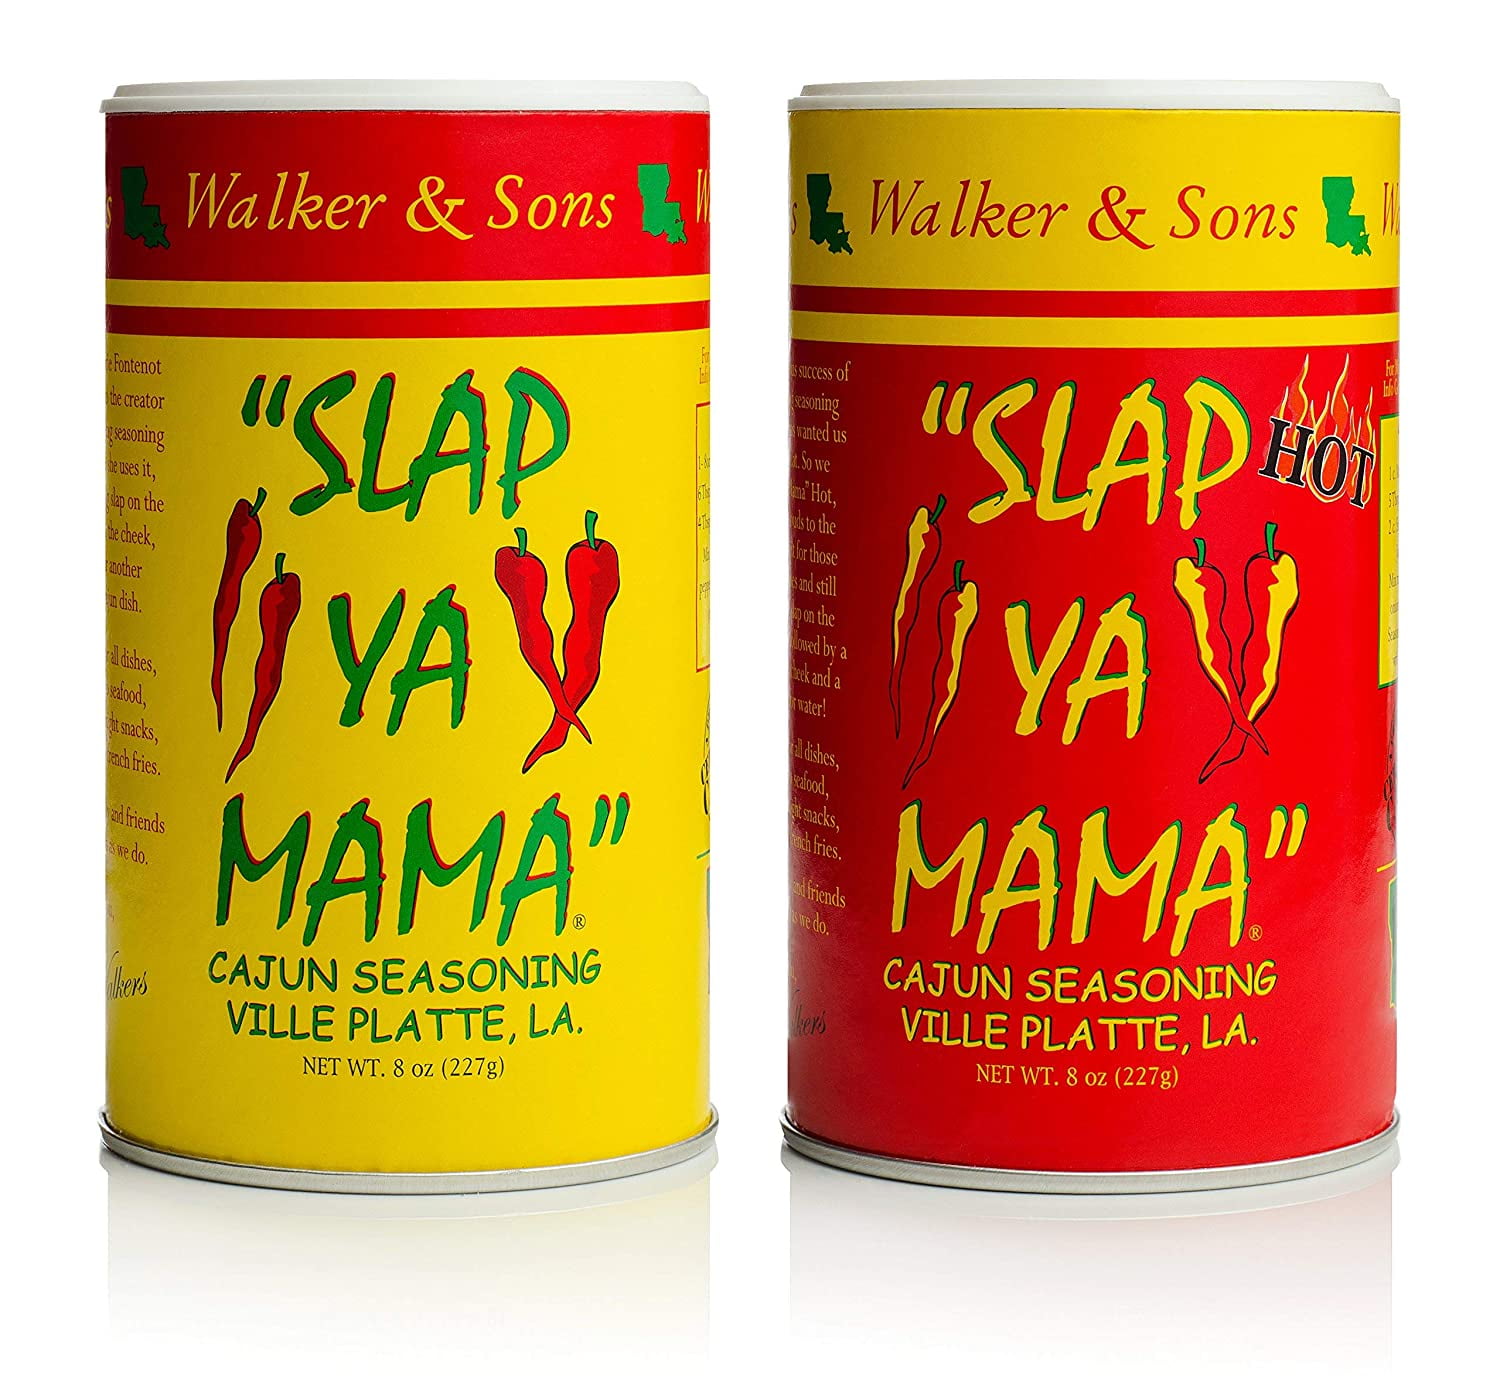 Slap Ya Mama All Natural Cajun Seasoning, MSG Free, 8 Ounce Can Variety 3-Pack (Original, Hot, White Pepper)